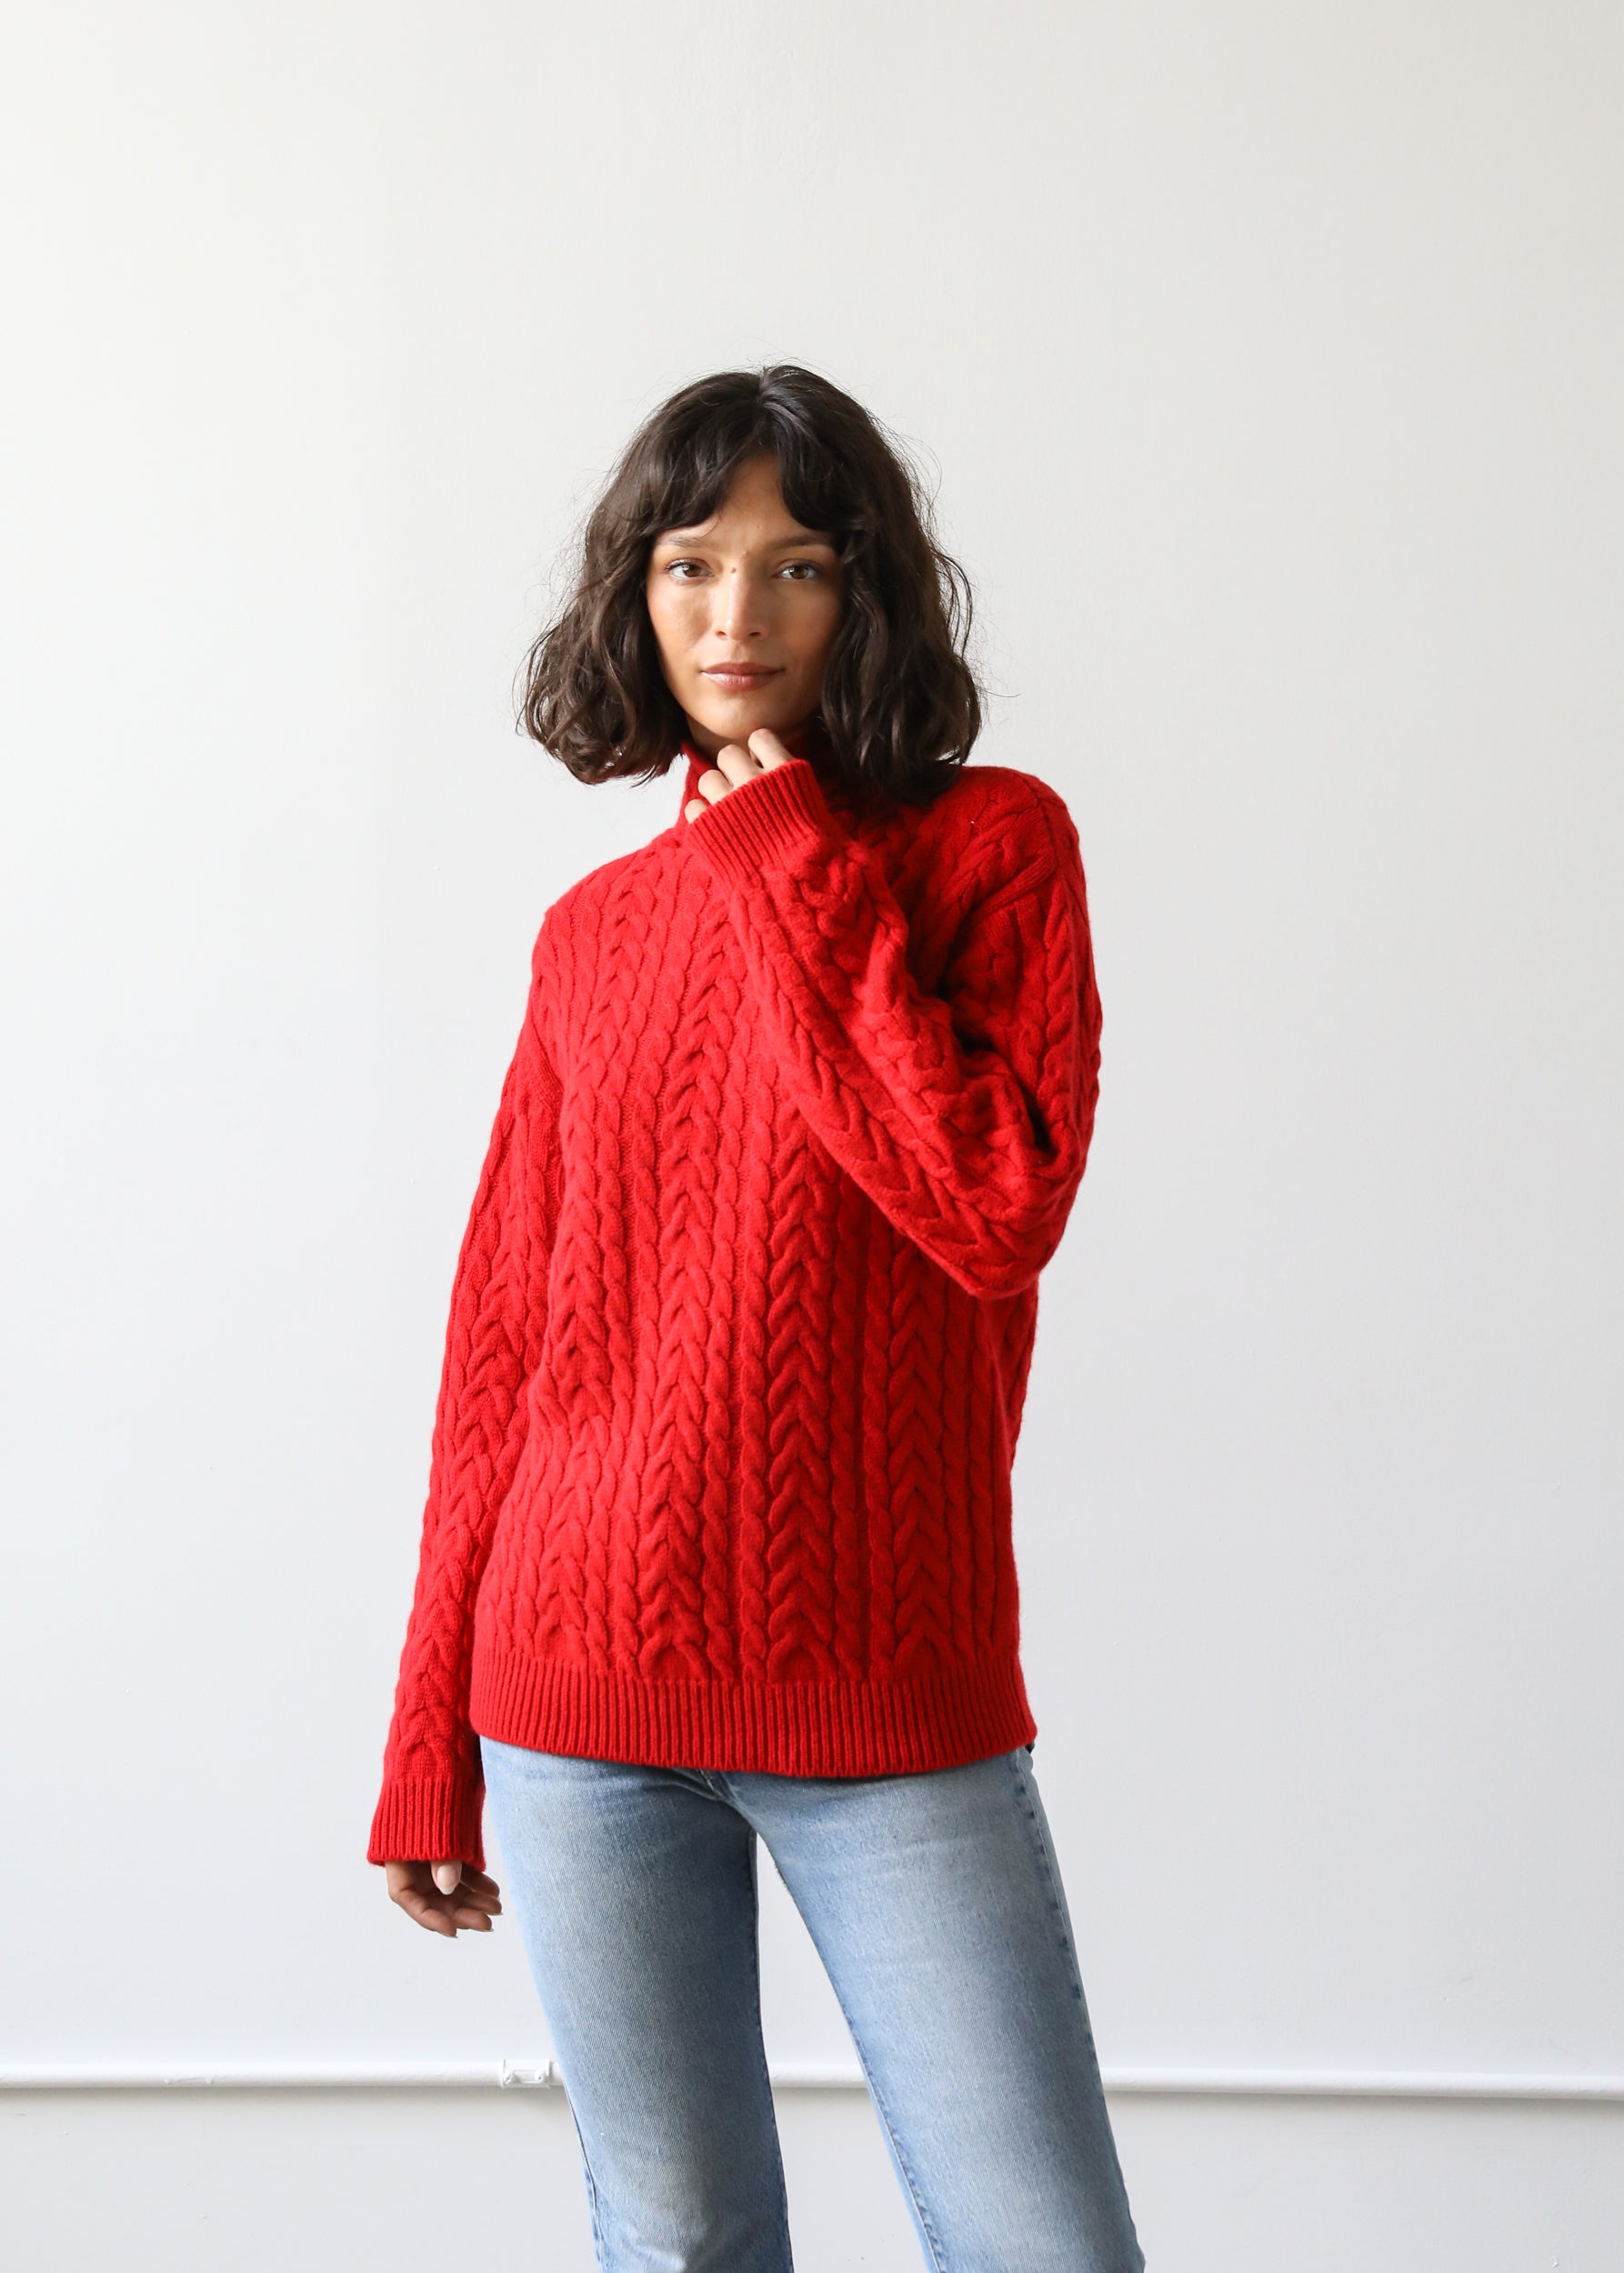 Estella NYC Beatrice Sweater in Scarlett Red Cashmere